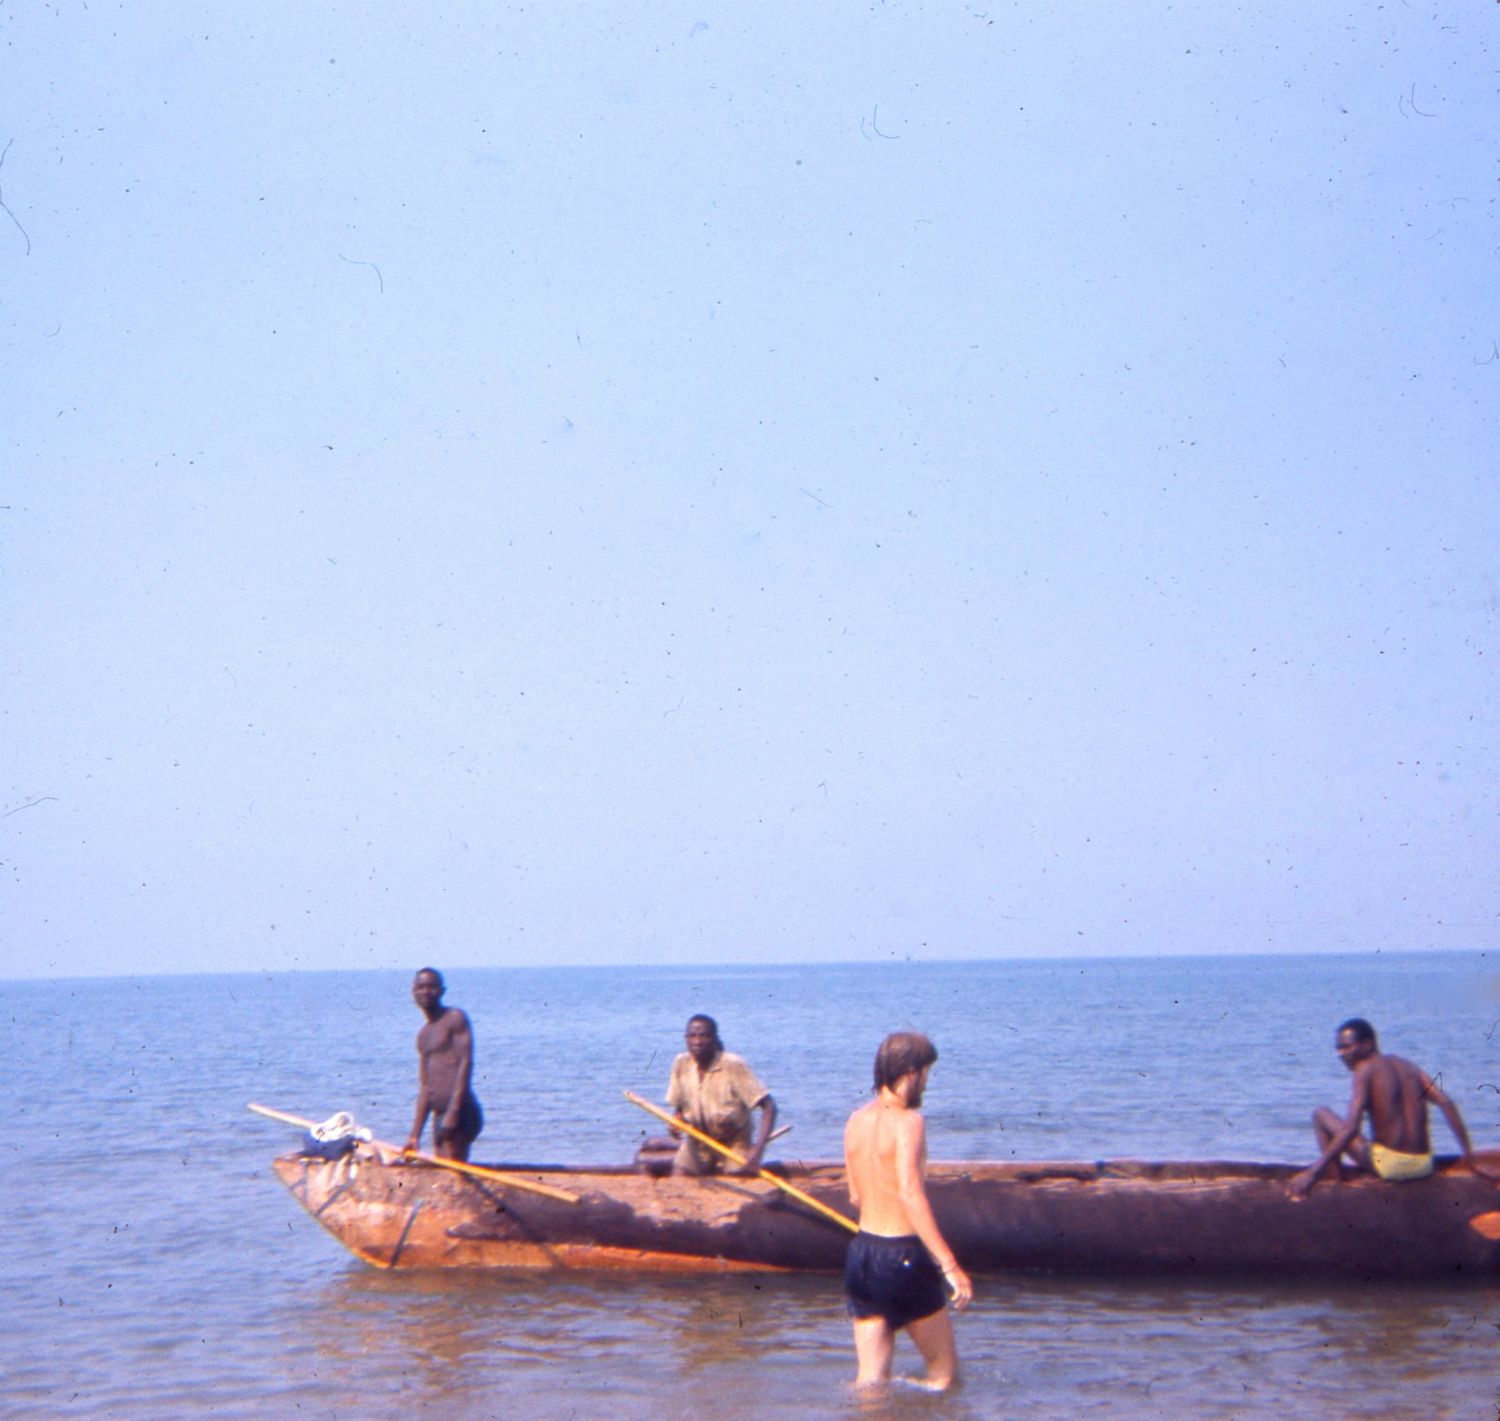 Badning og kano i Tanganyikasøen, men så kom en flodhest